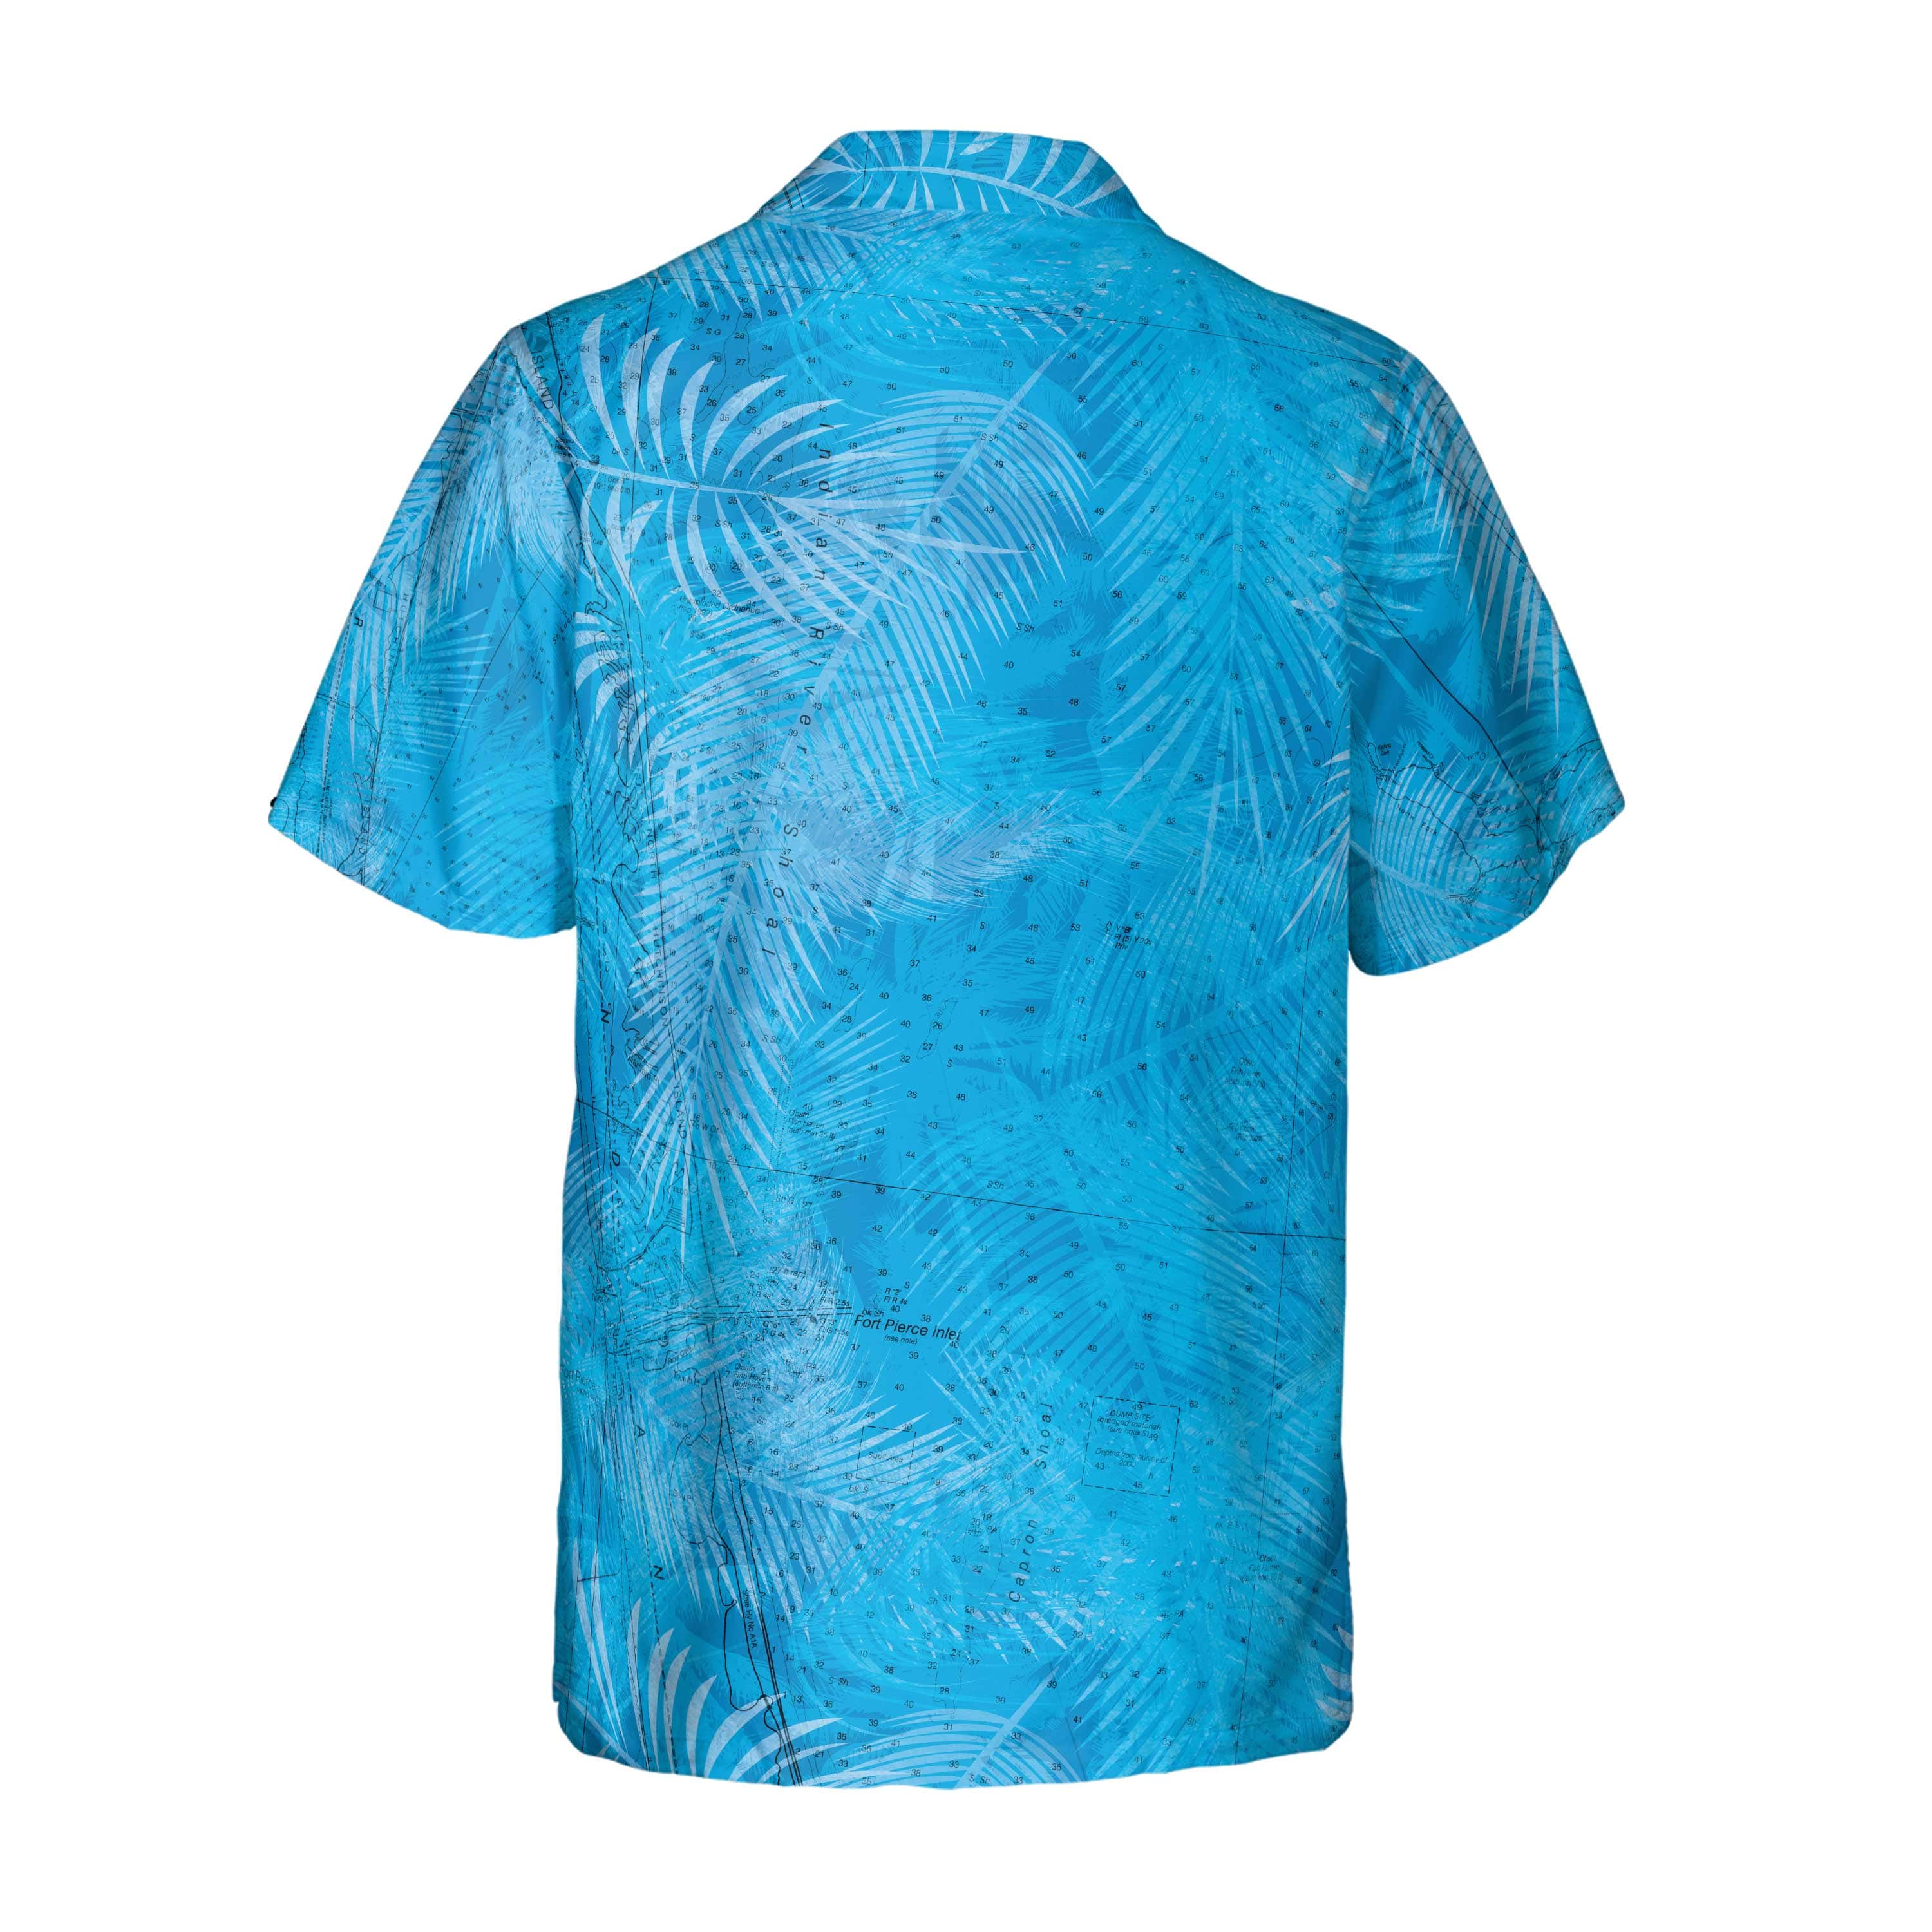 The Treasure Coast North Tropical Blue Shirt